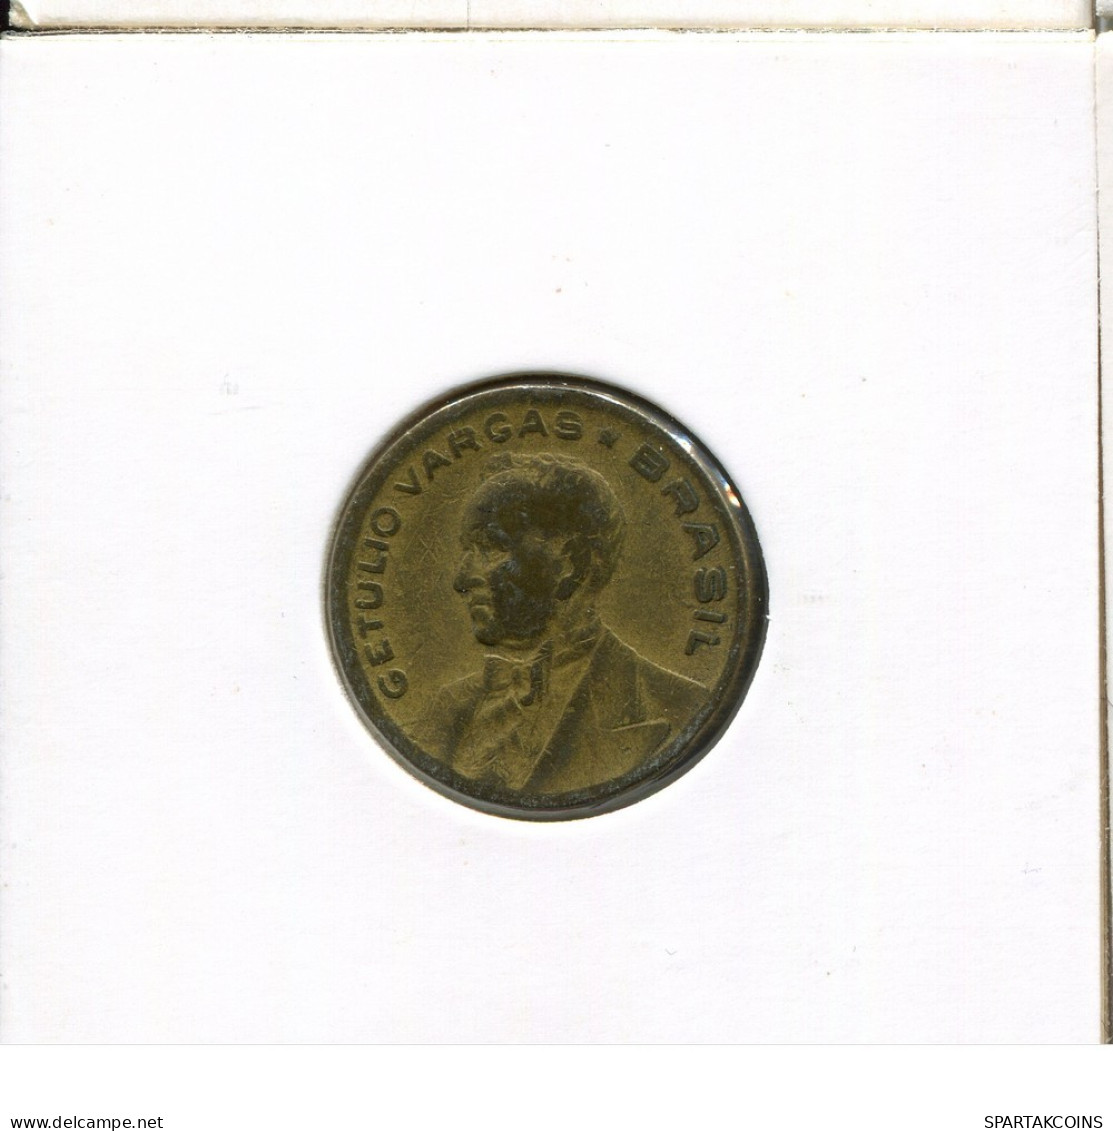 20 CENTAVOS 1945 BRAZIL Coin #AR305.U.A - Brasilien